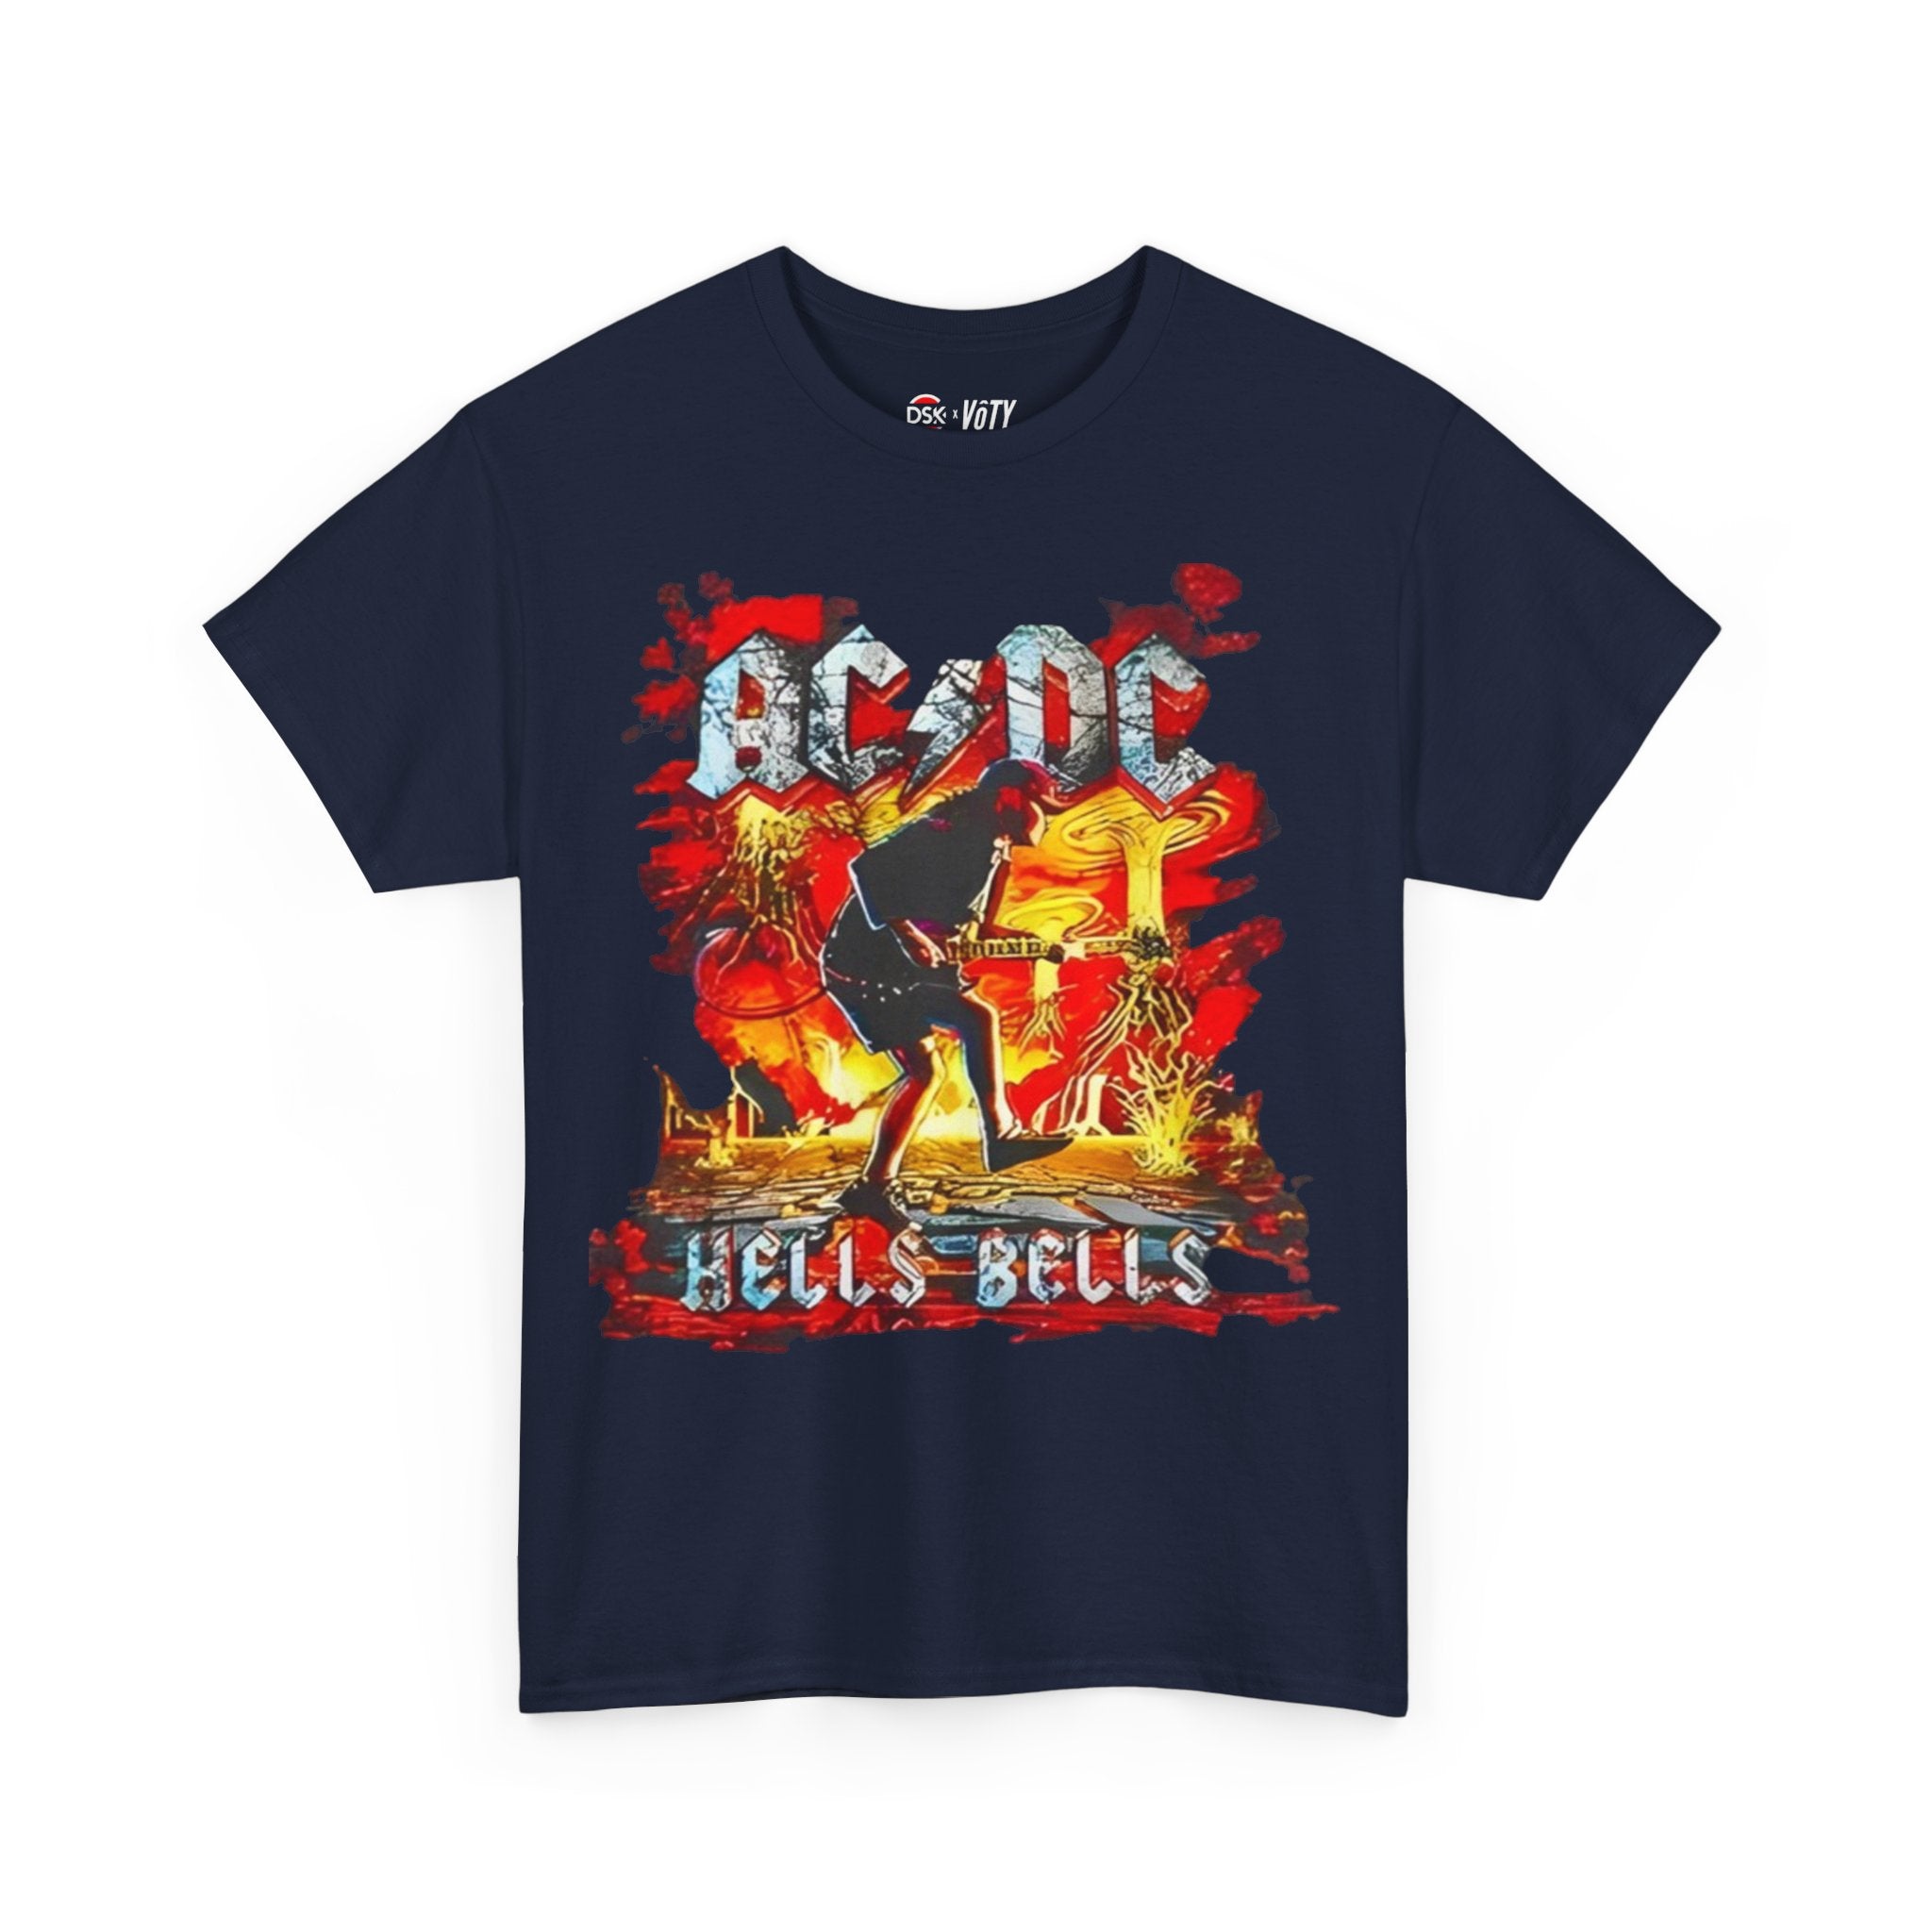 ACDC "Hells Bells" T-Shirt